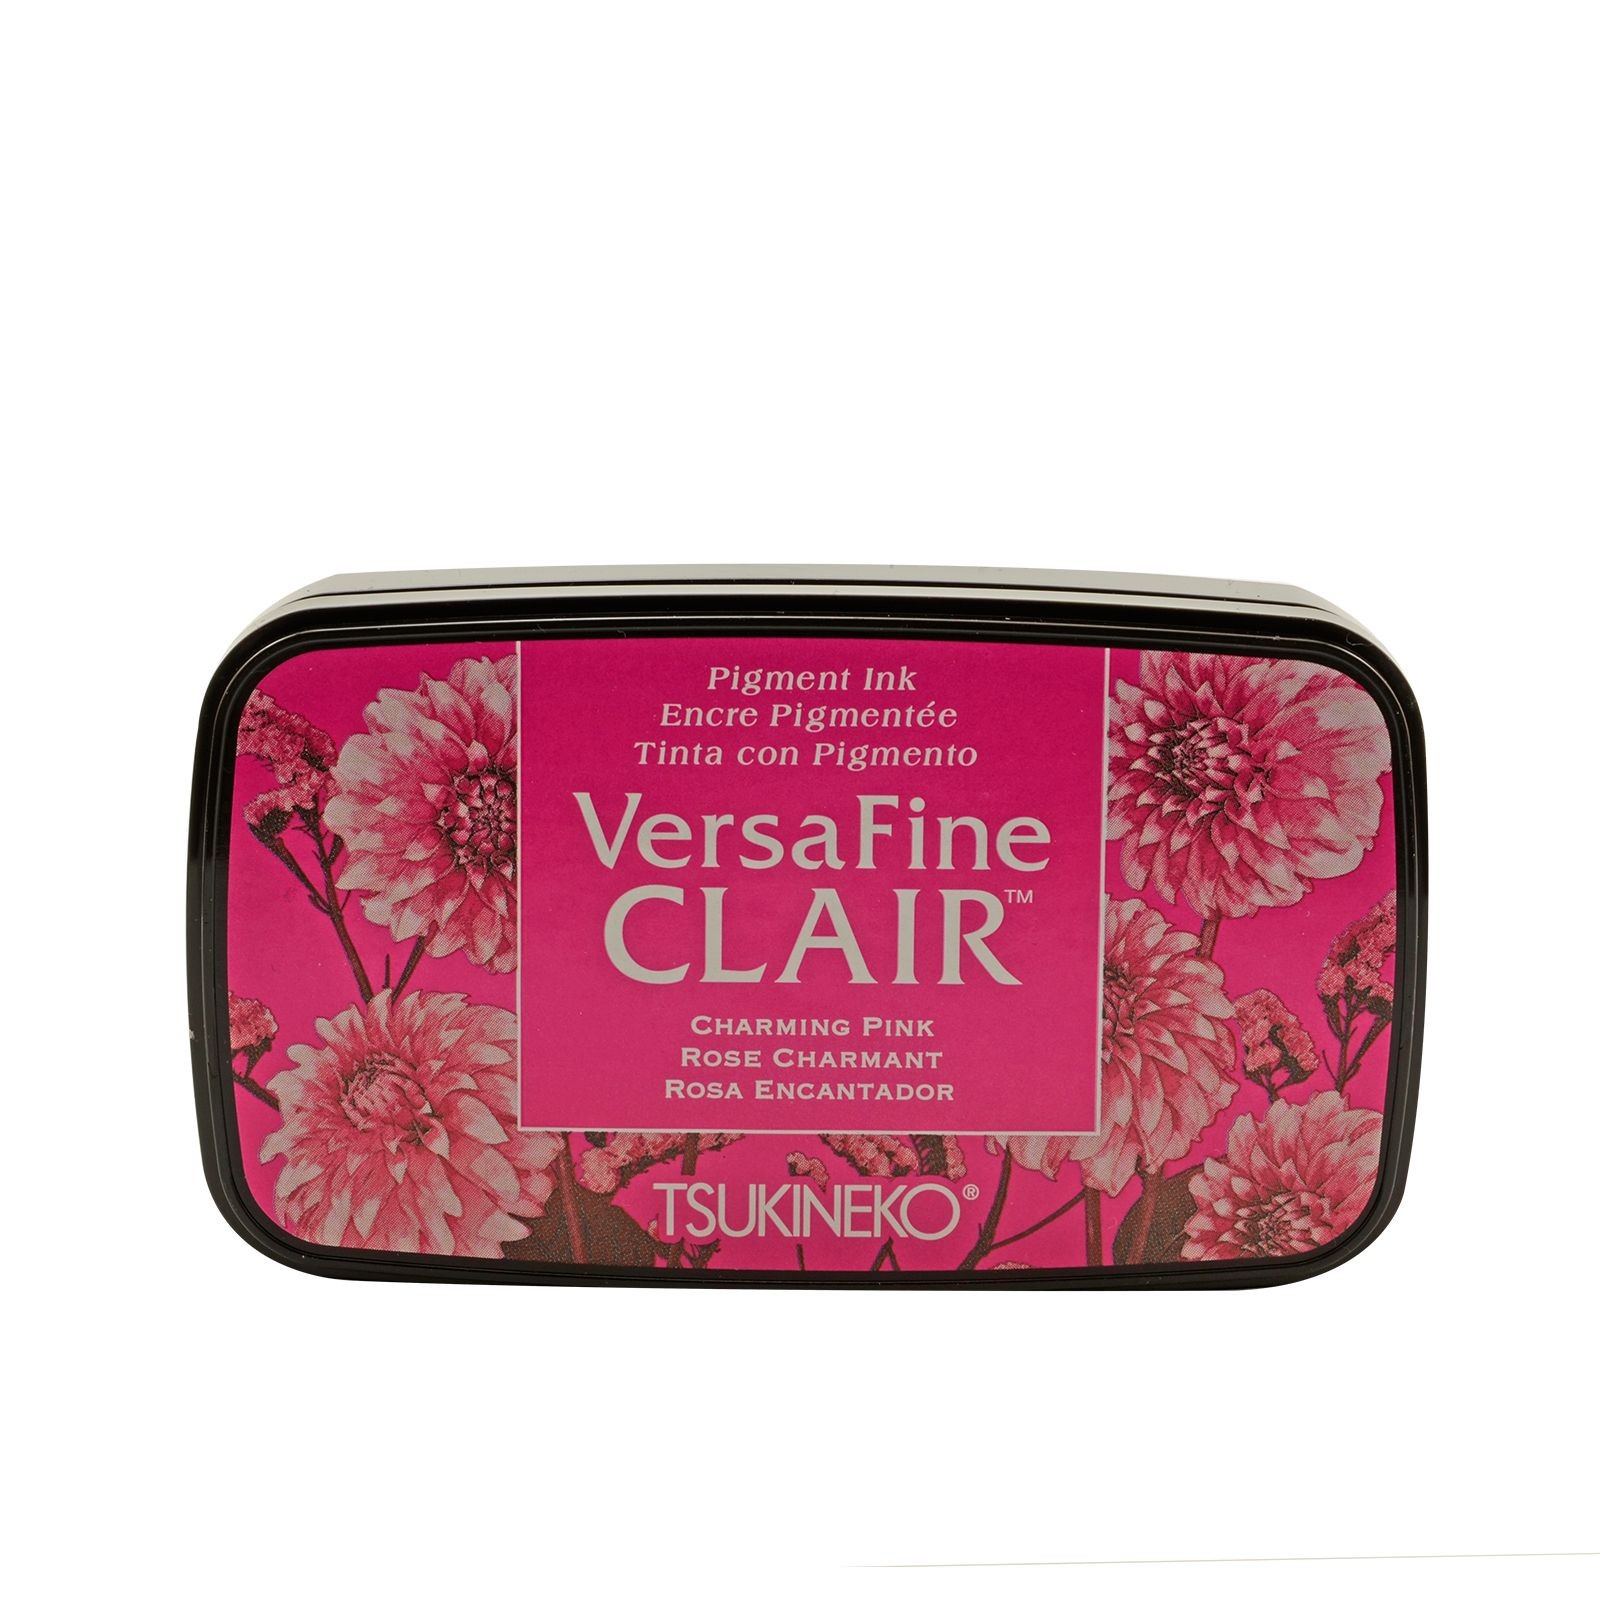 Charming Pink - VersaFine Clair